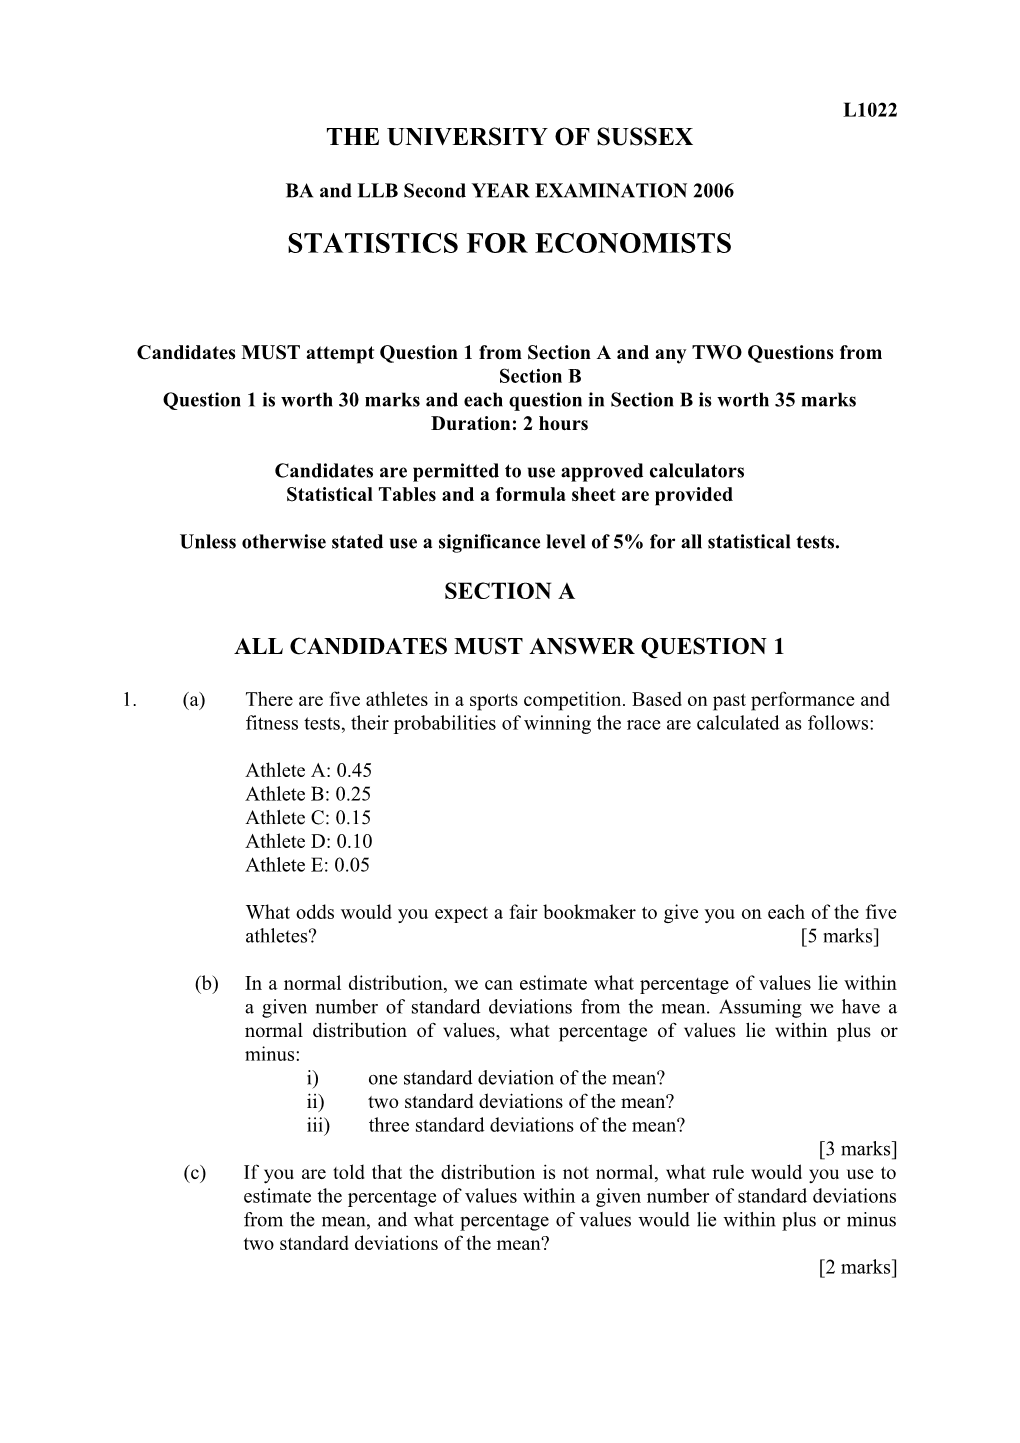 Statistics for Economists Second Year Exam 2006